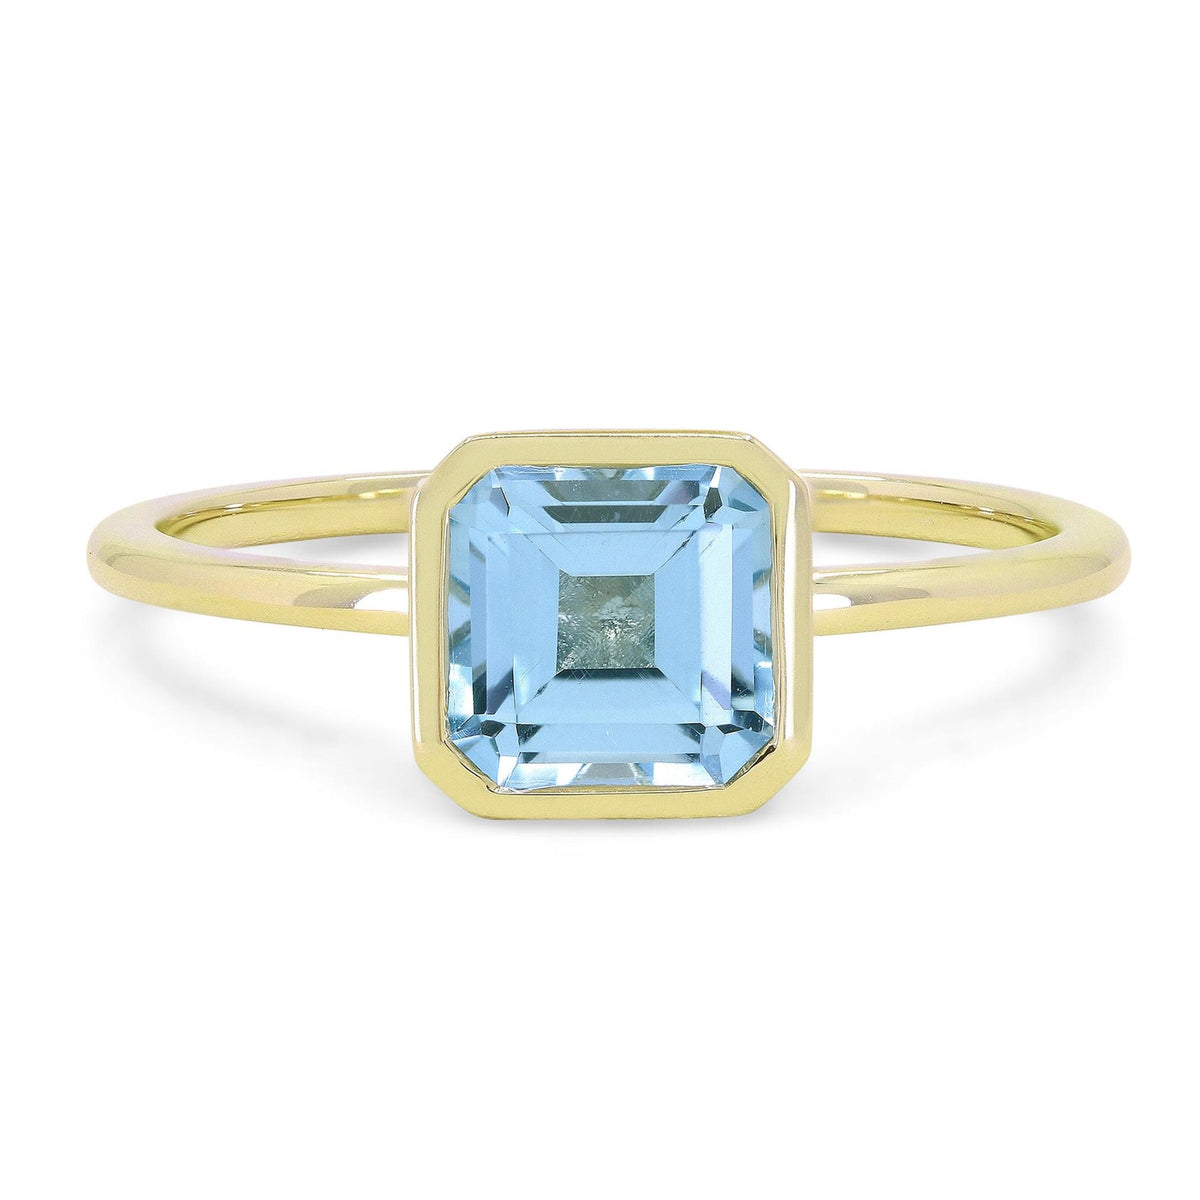 14Kt Yellow Gold Bezel Set Gemstone Ring With Blue Topaz